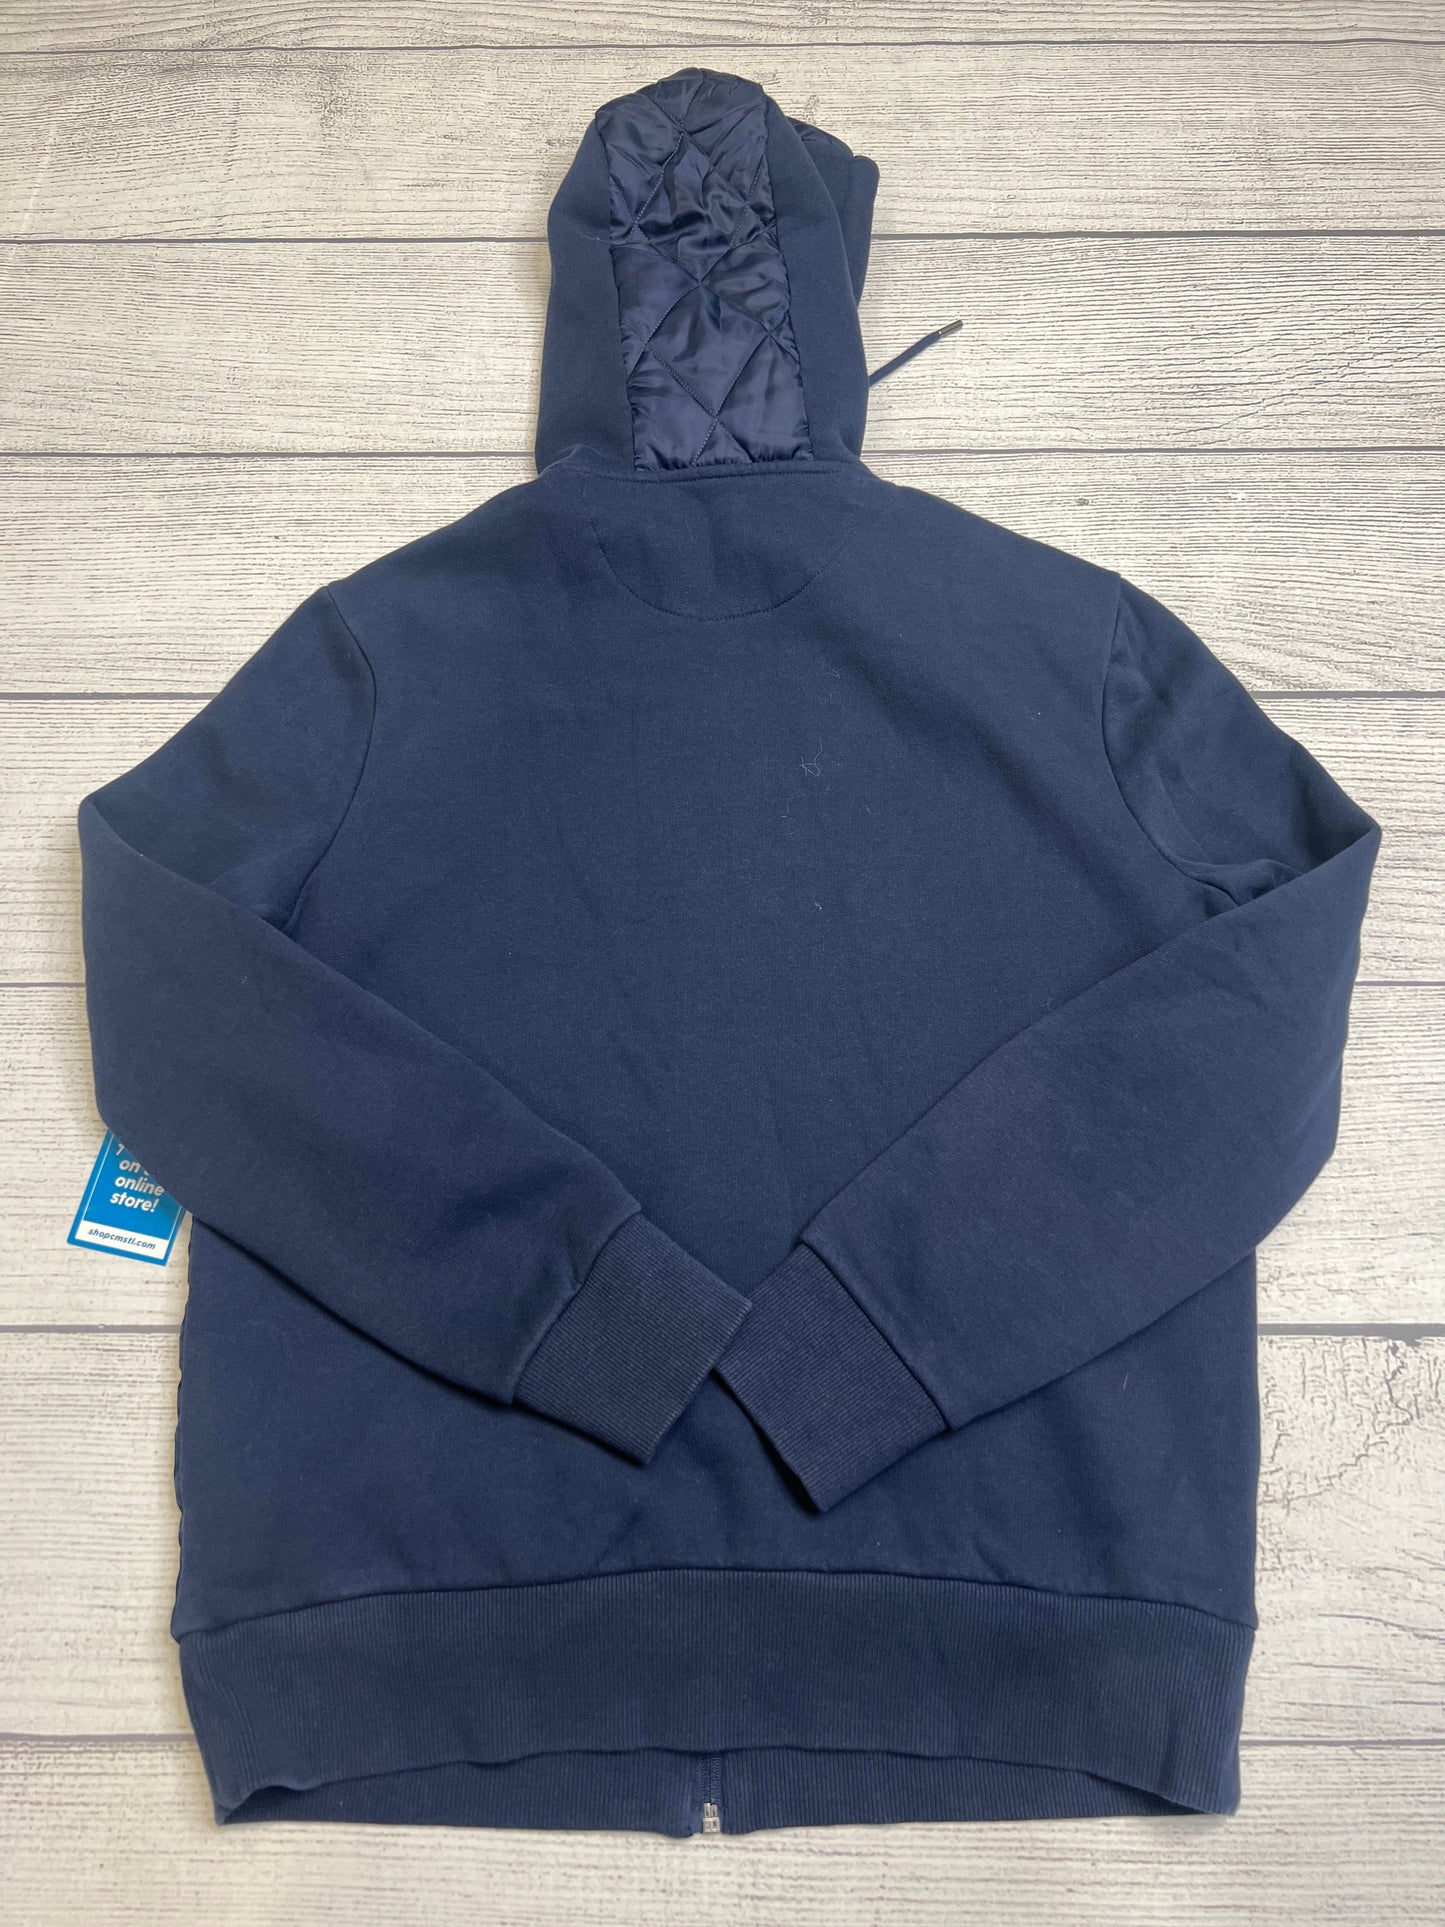 Coat / Jacket By Michael Kors  Size: M